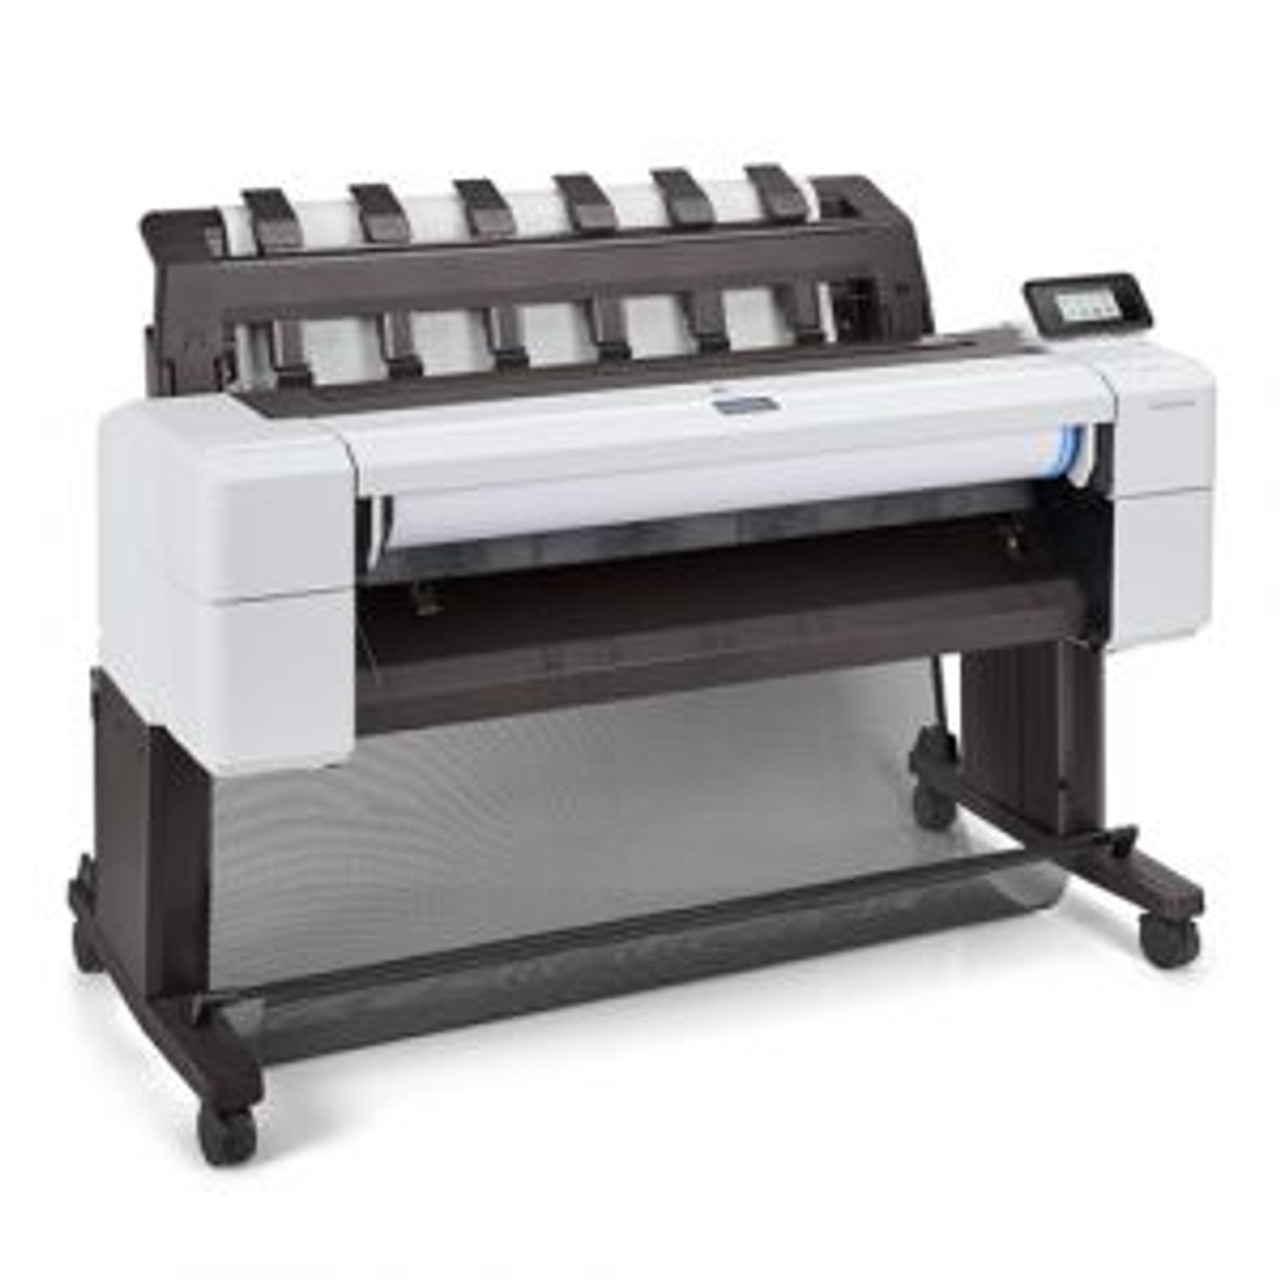 Printers & Cartridges,Printer,Inkjet printers,HP,3EK10A#B1K